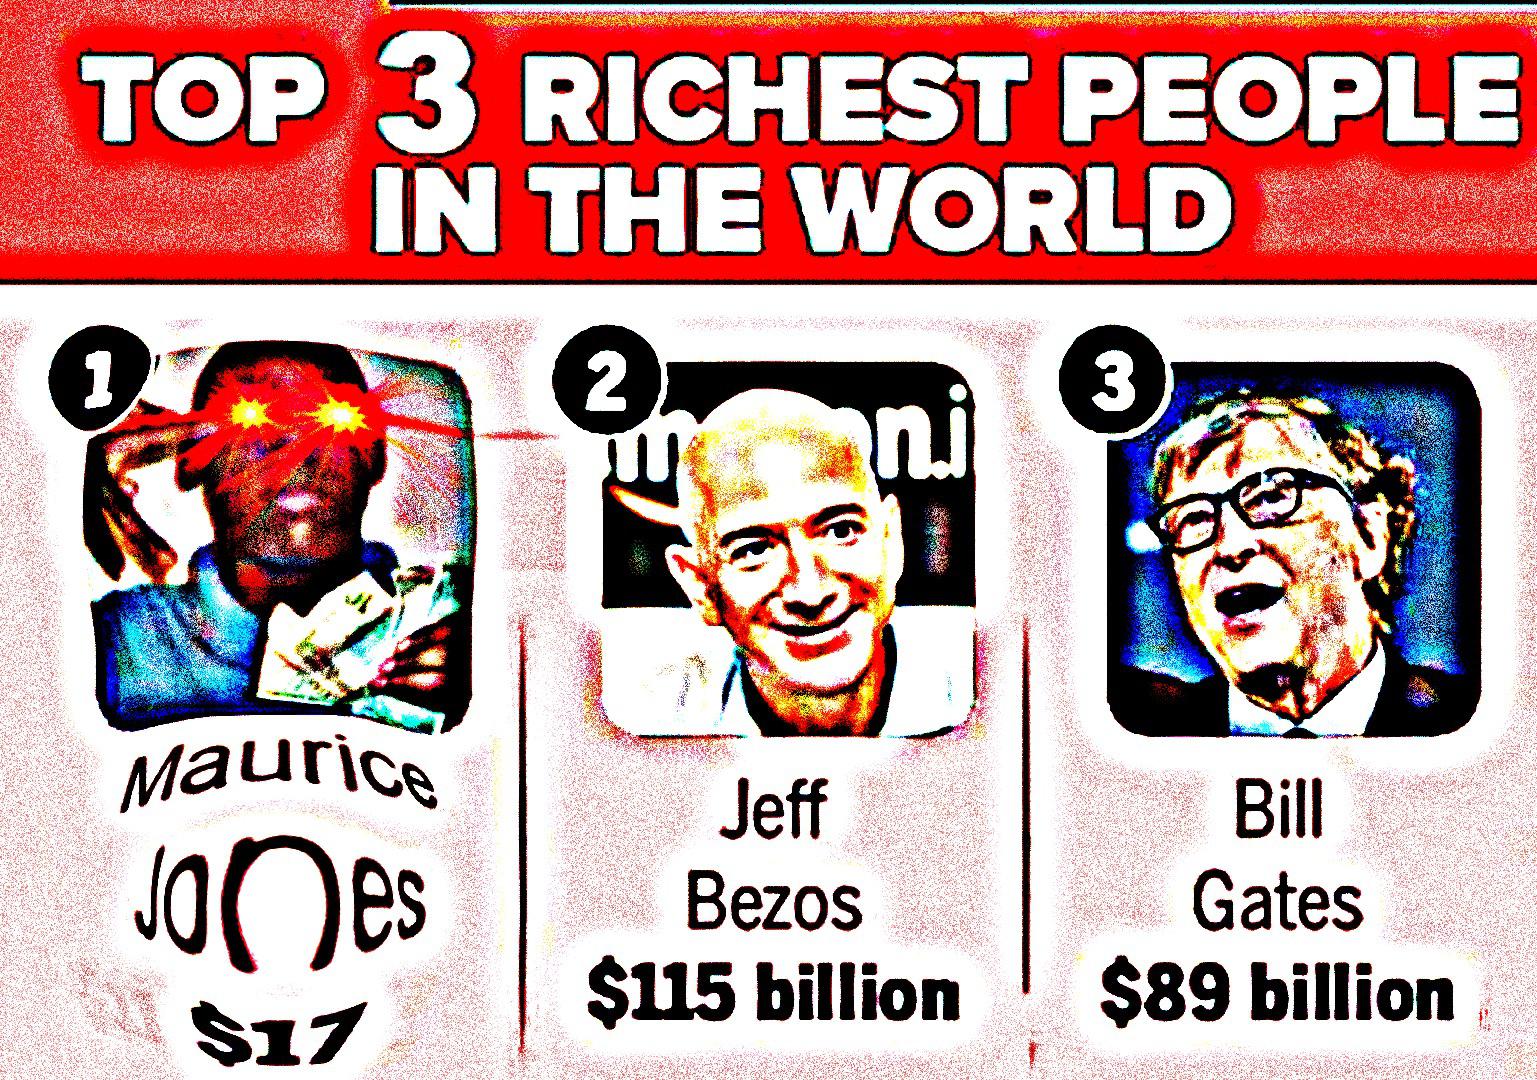 Deep-fried,  Deep Fried Memes Deep-fried,  text: TOP 3 RICHEST PEOPLE IN THE WORLD Jeff JoOes Bezos $115 billion Bill Gates $89 billion 